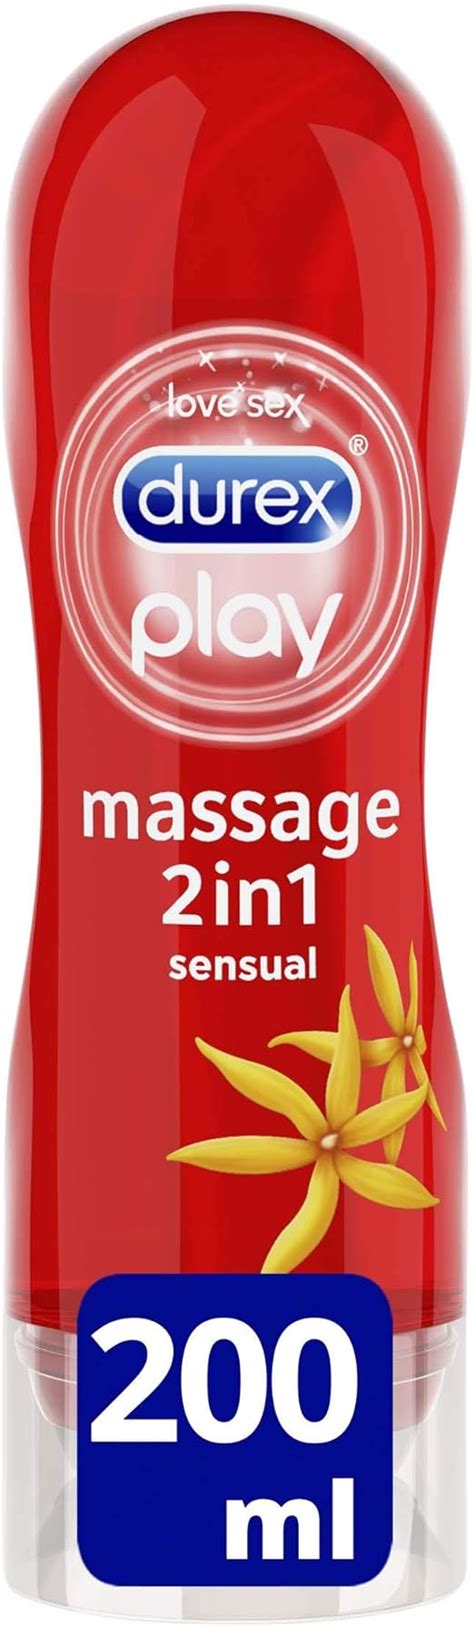 Durex Massage Lube In Sensual Lubricant Gel With Ylang Ylang Ml Amazon Co Uk Health